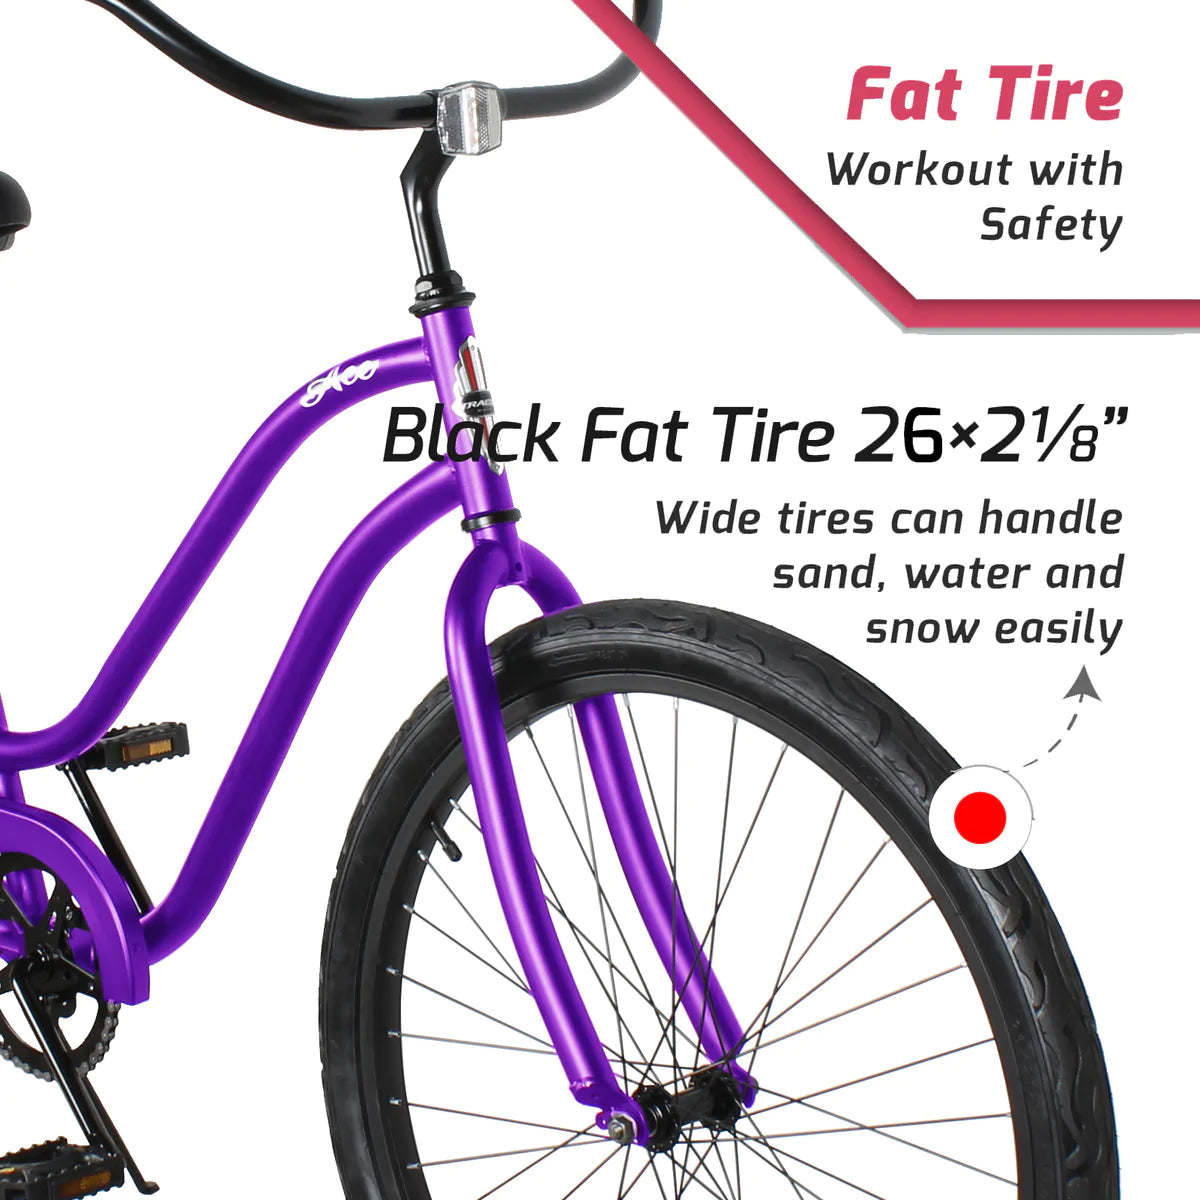 Tracer ACE-F 26" Beach Cruiser Bikes Single Speed - Purple | Beach Cruiser Bikes | Cruiser Bikes | Beach Bikes | Single Speed | Adult Bike | Bike Lover USA 